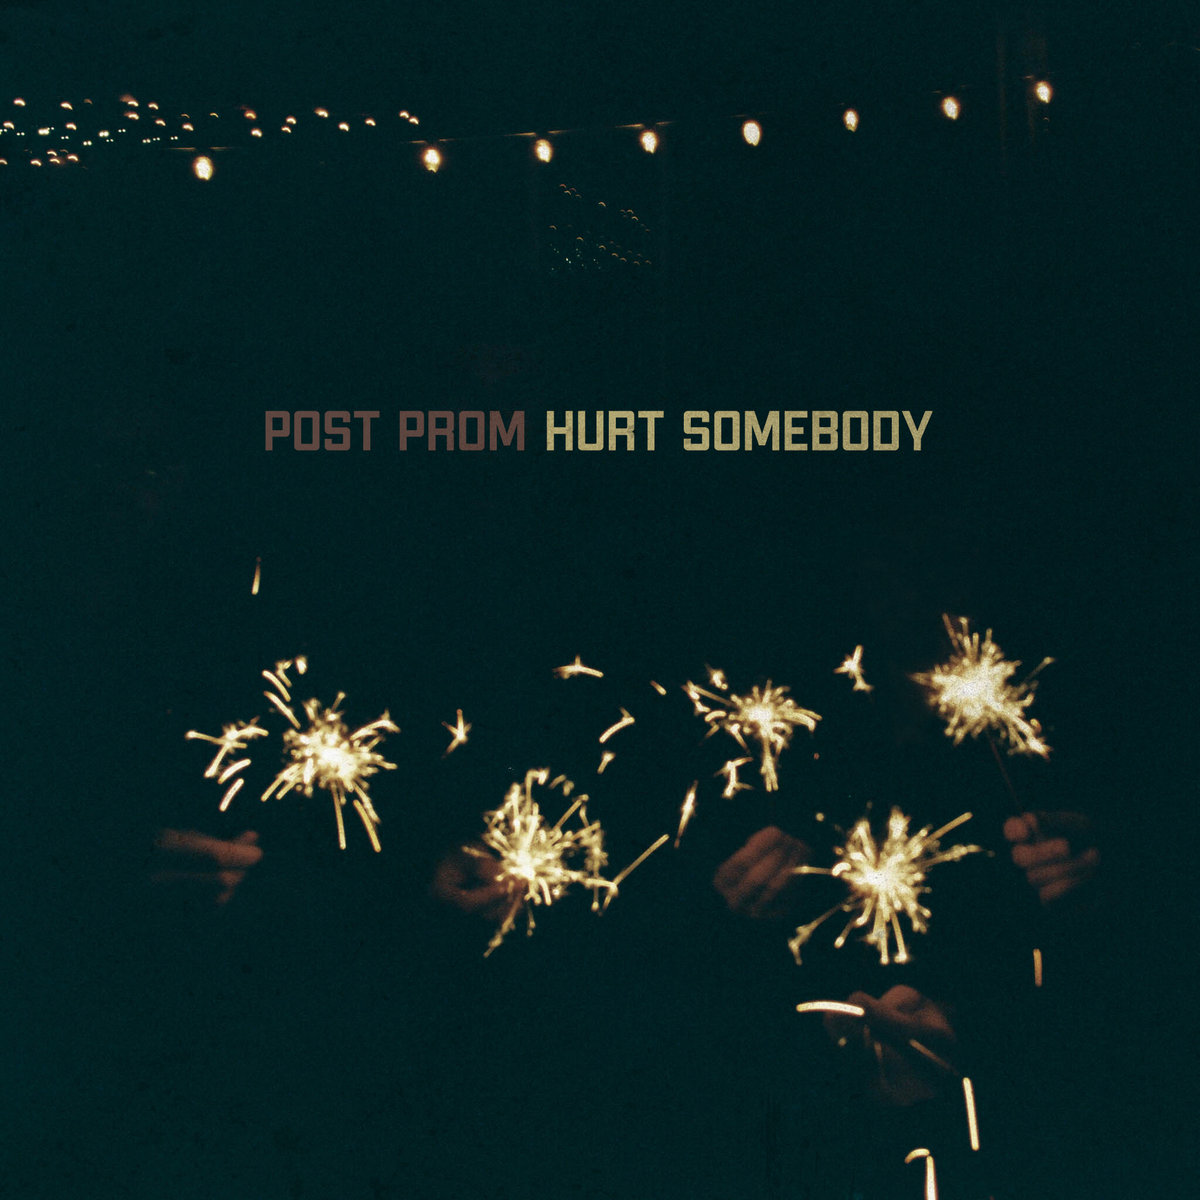 Post Prom Posts New Single, “Hurt Somebody”